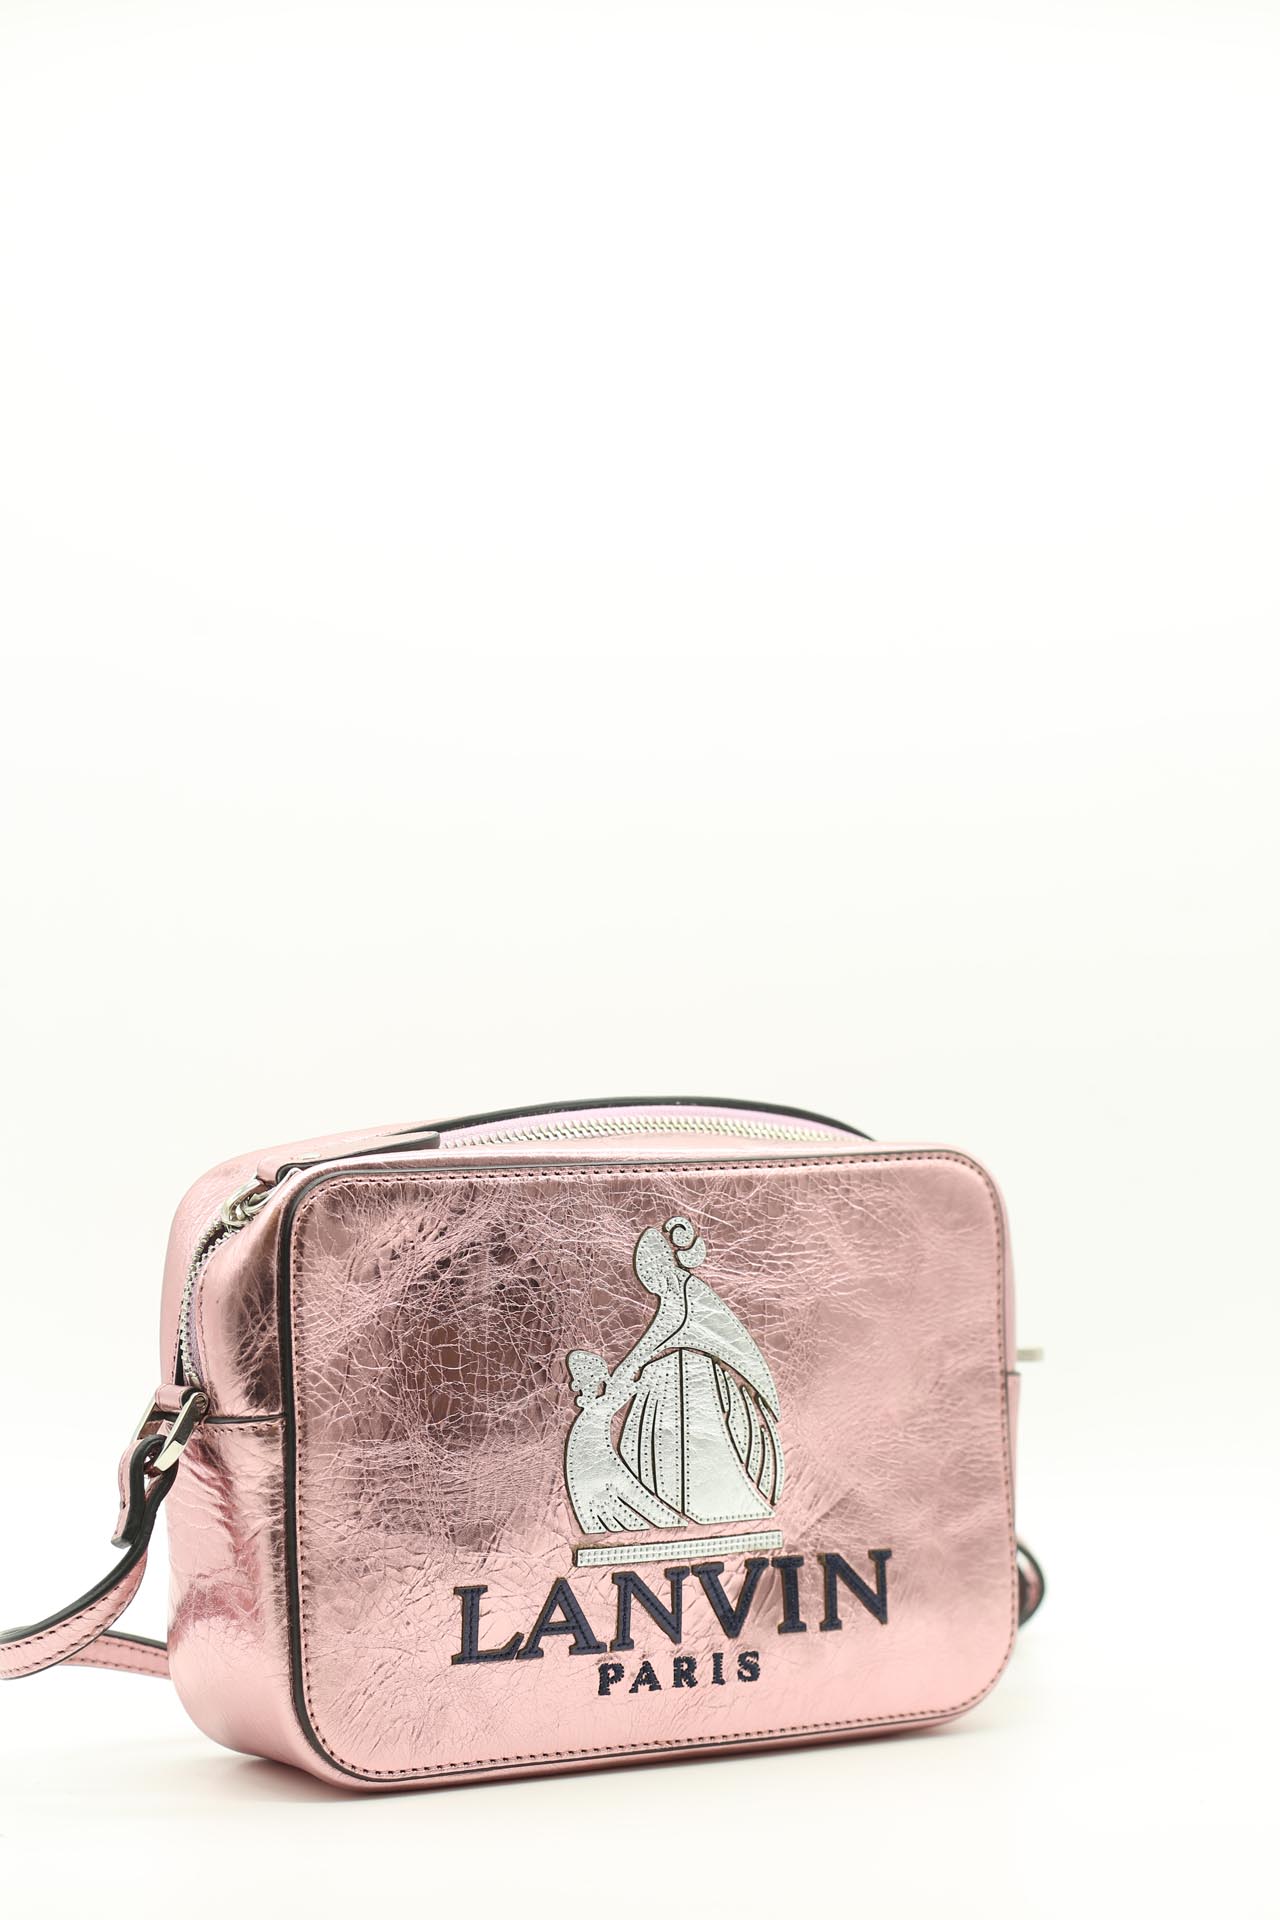 Lanvin, Bag